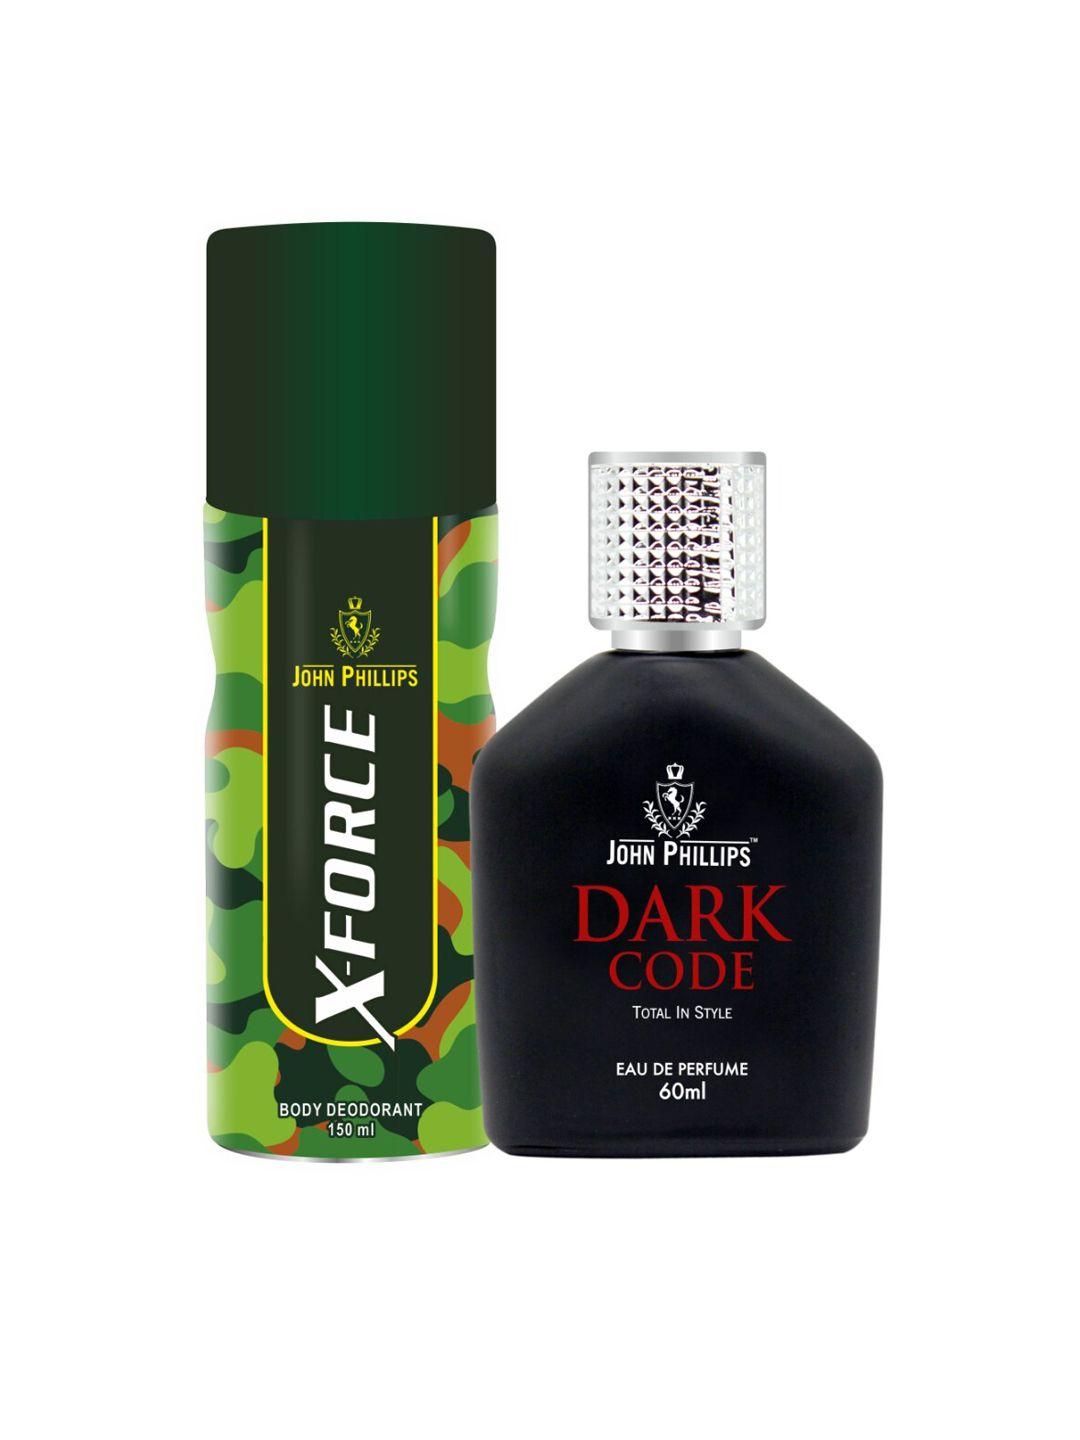 john phillips set of dark code total in style eau de parfum 60ml & x force deodorant 150ml